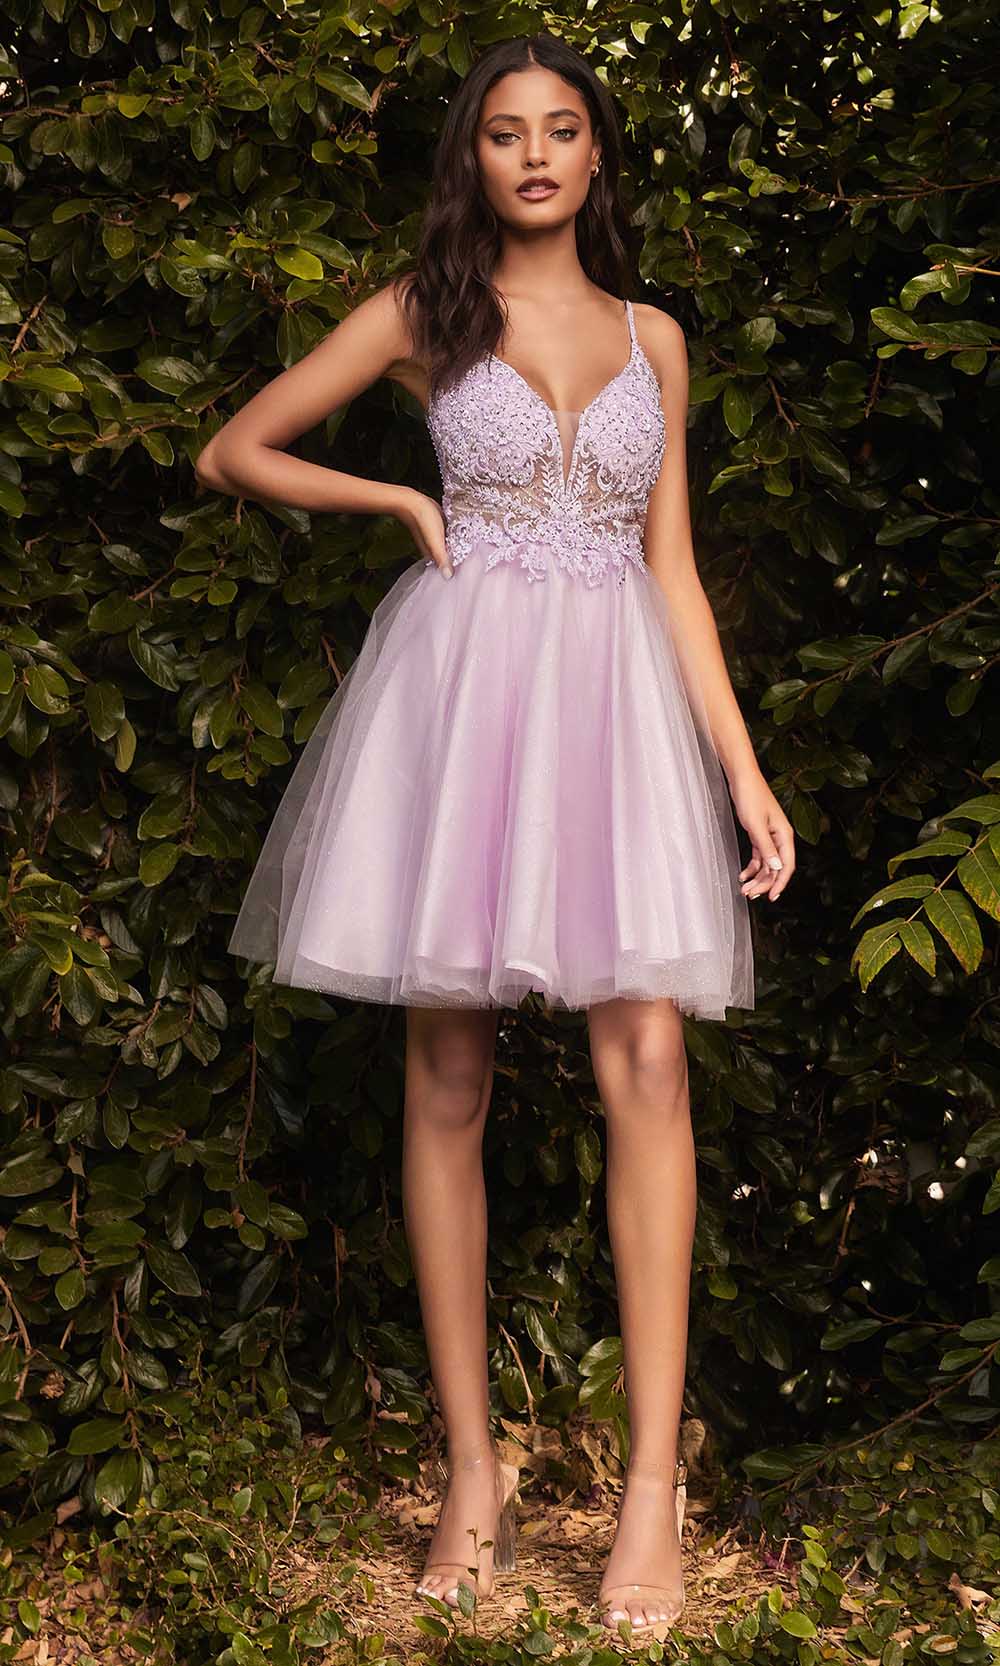 Cinderella Divine CD0190 In Purplegrade 8 grad dresses, graduation dresses